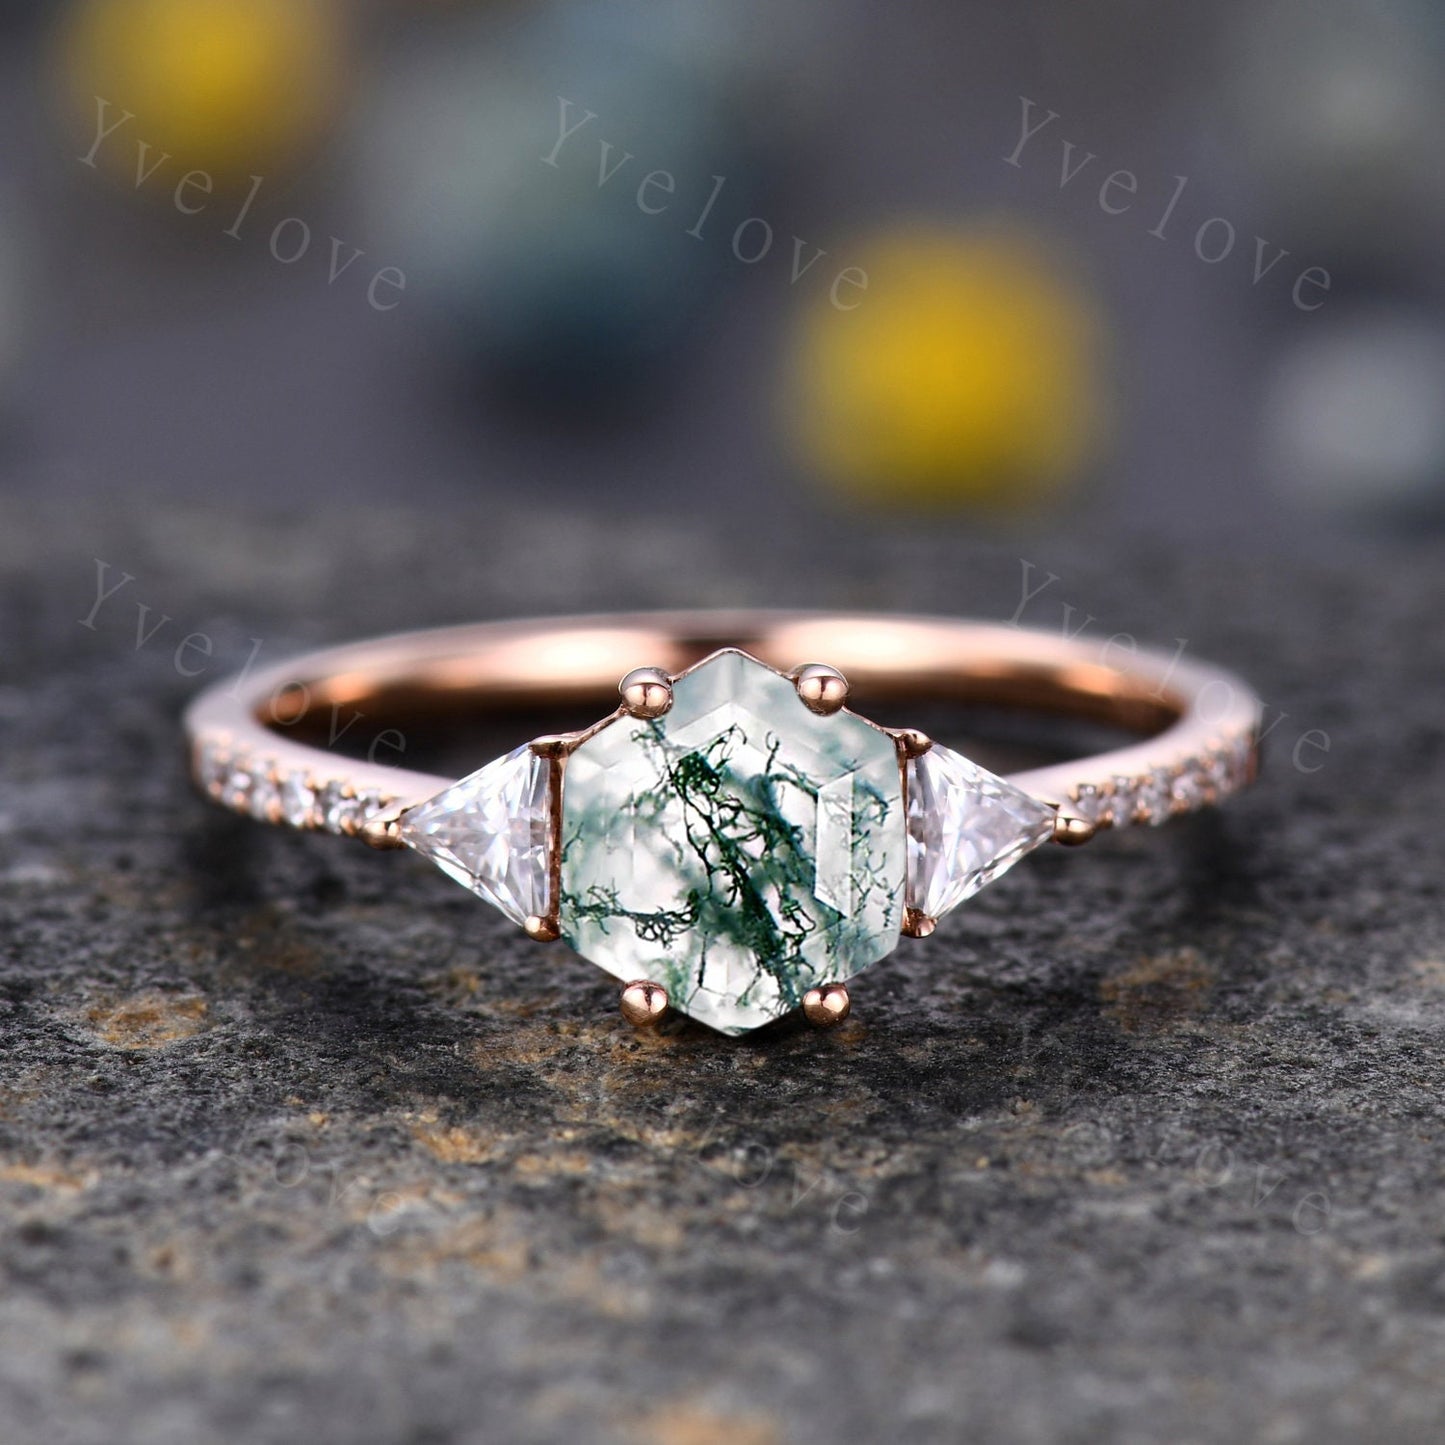 Hexagon Cut Moonstone Engagement Ring,Vingate Bridal Ring,925 Silver,Gothic Ring,Moissanite Anniversary Wedding Ring Birthday Gift for Her